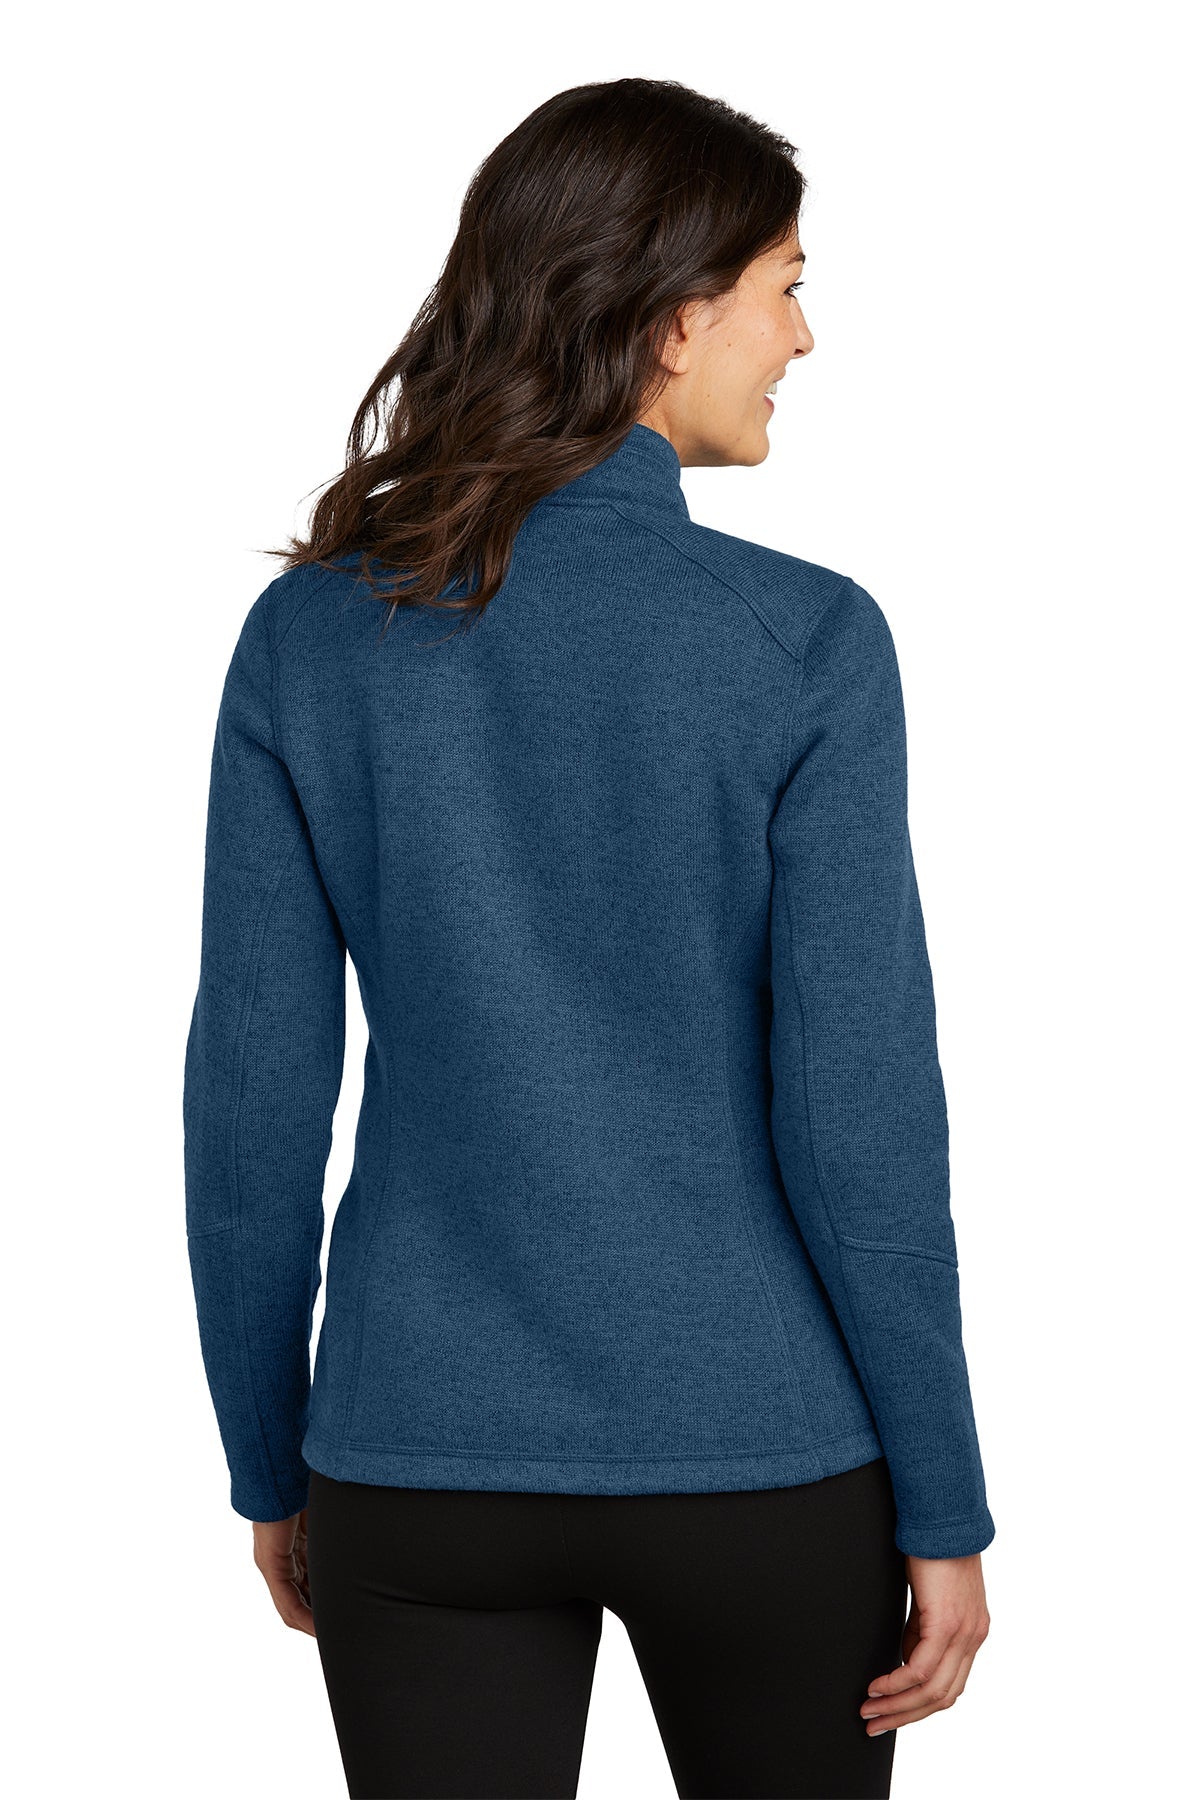 L428 Port Authority® Ladies Arc Sweater Fleece Jacket